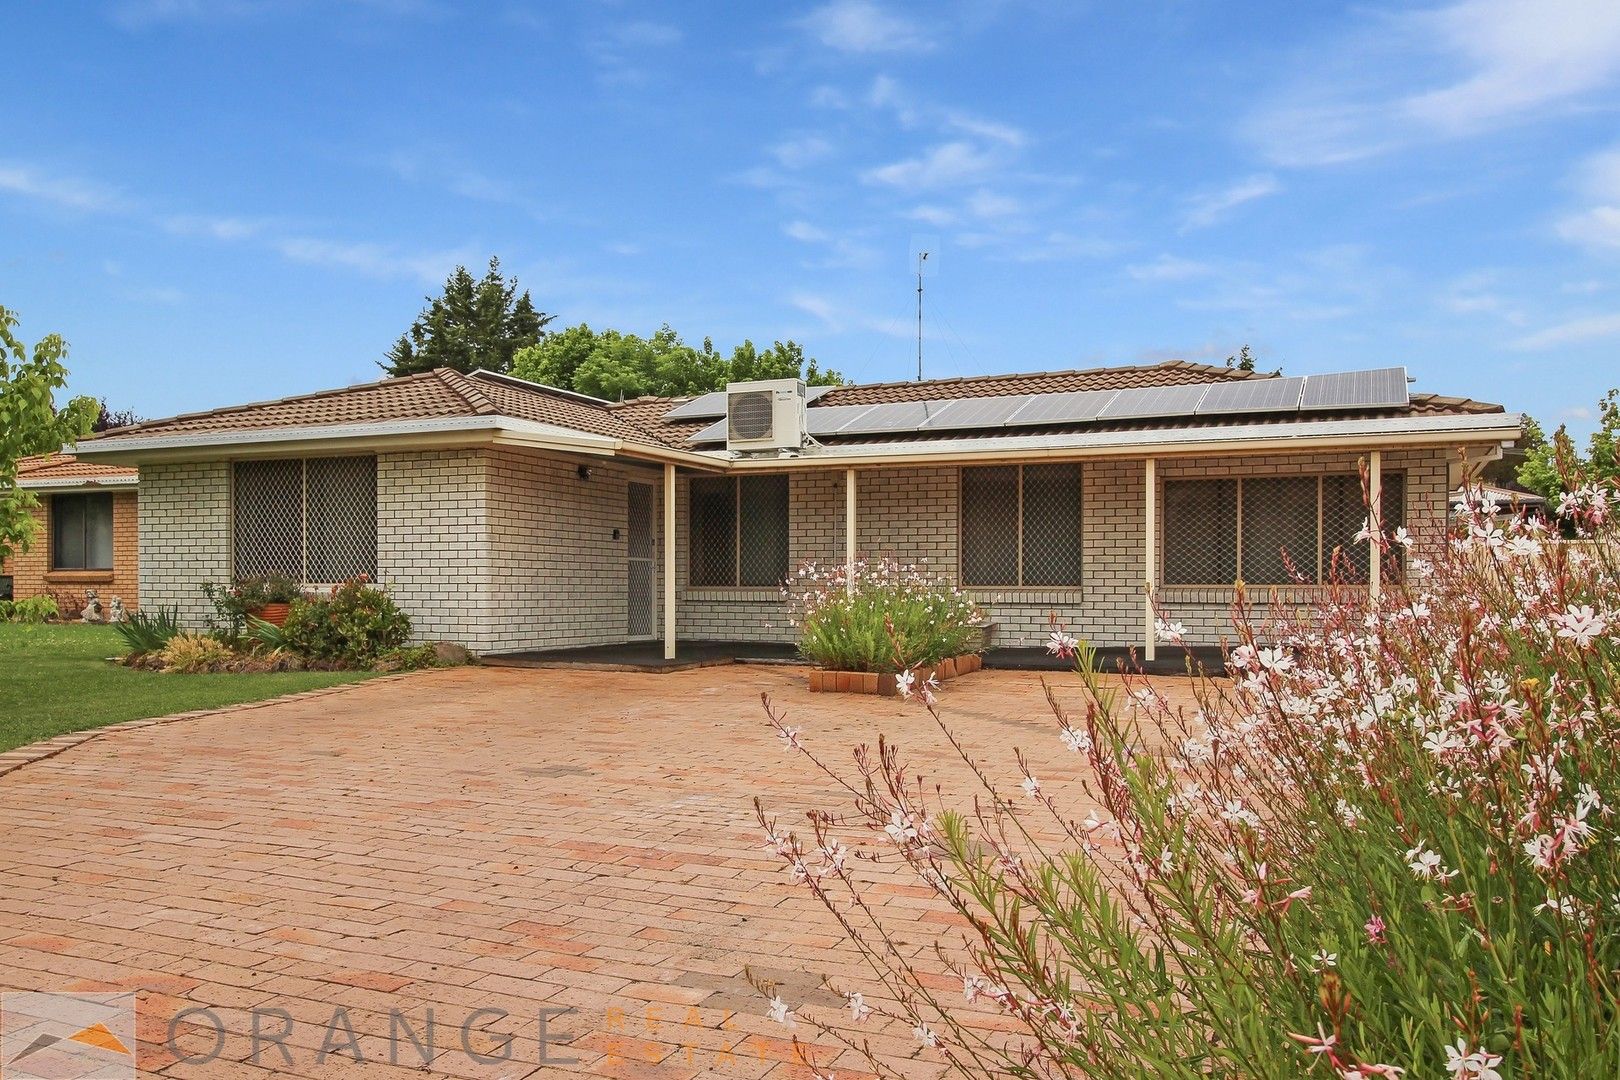 3 bedrooms House in 45 Torulosa Way ORANGE NSW, 2800